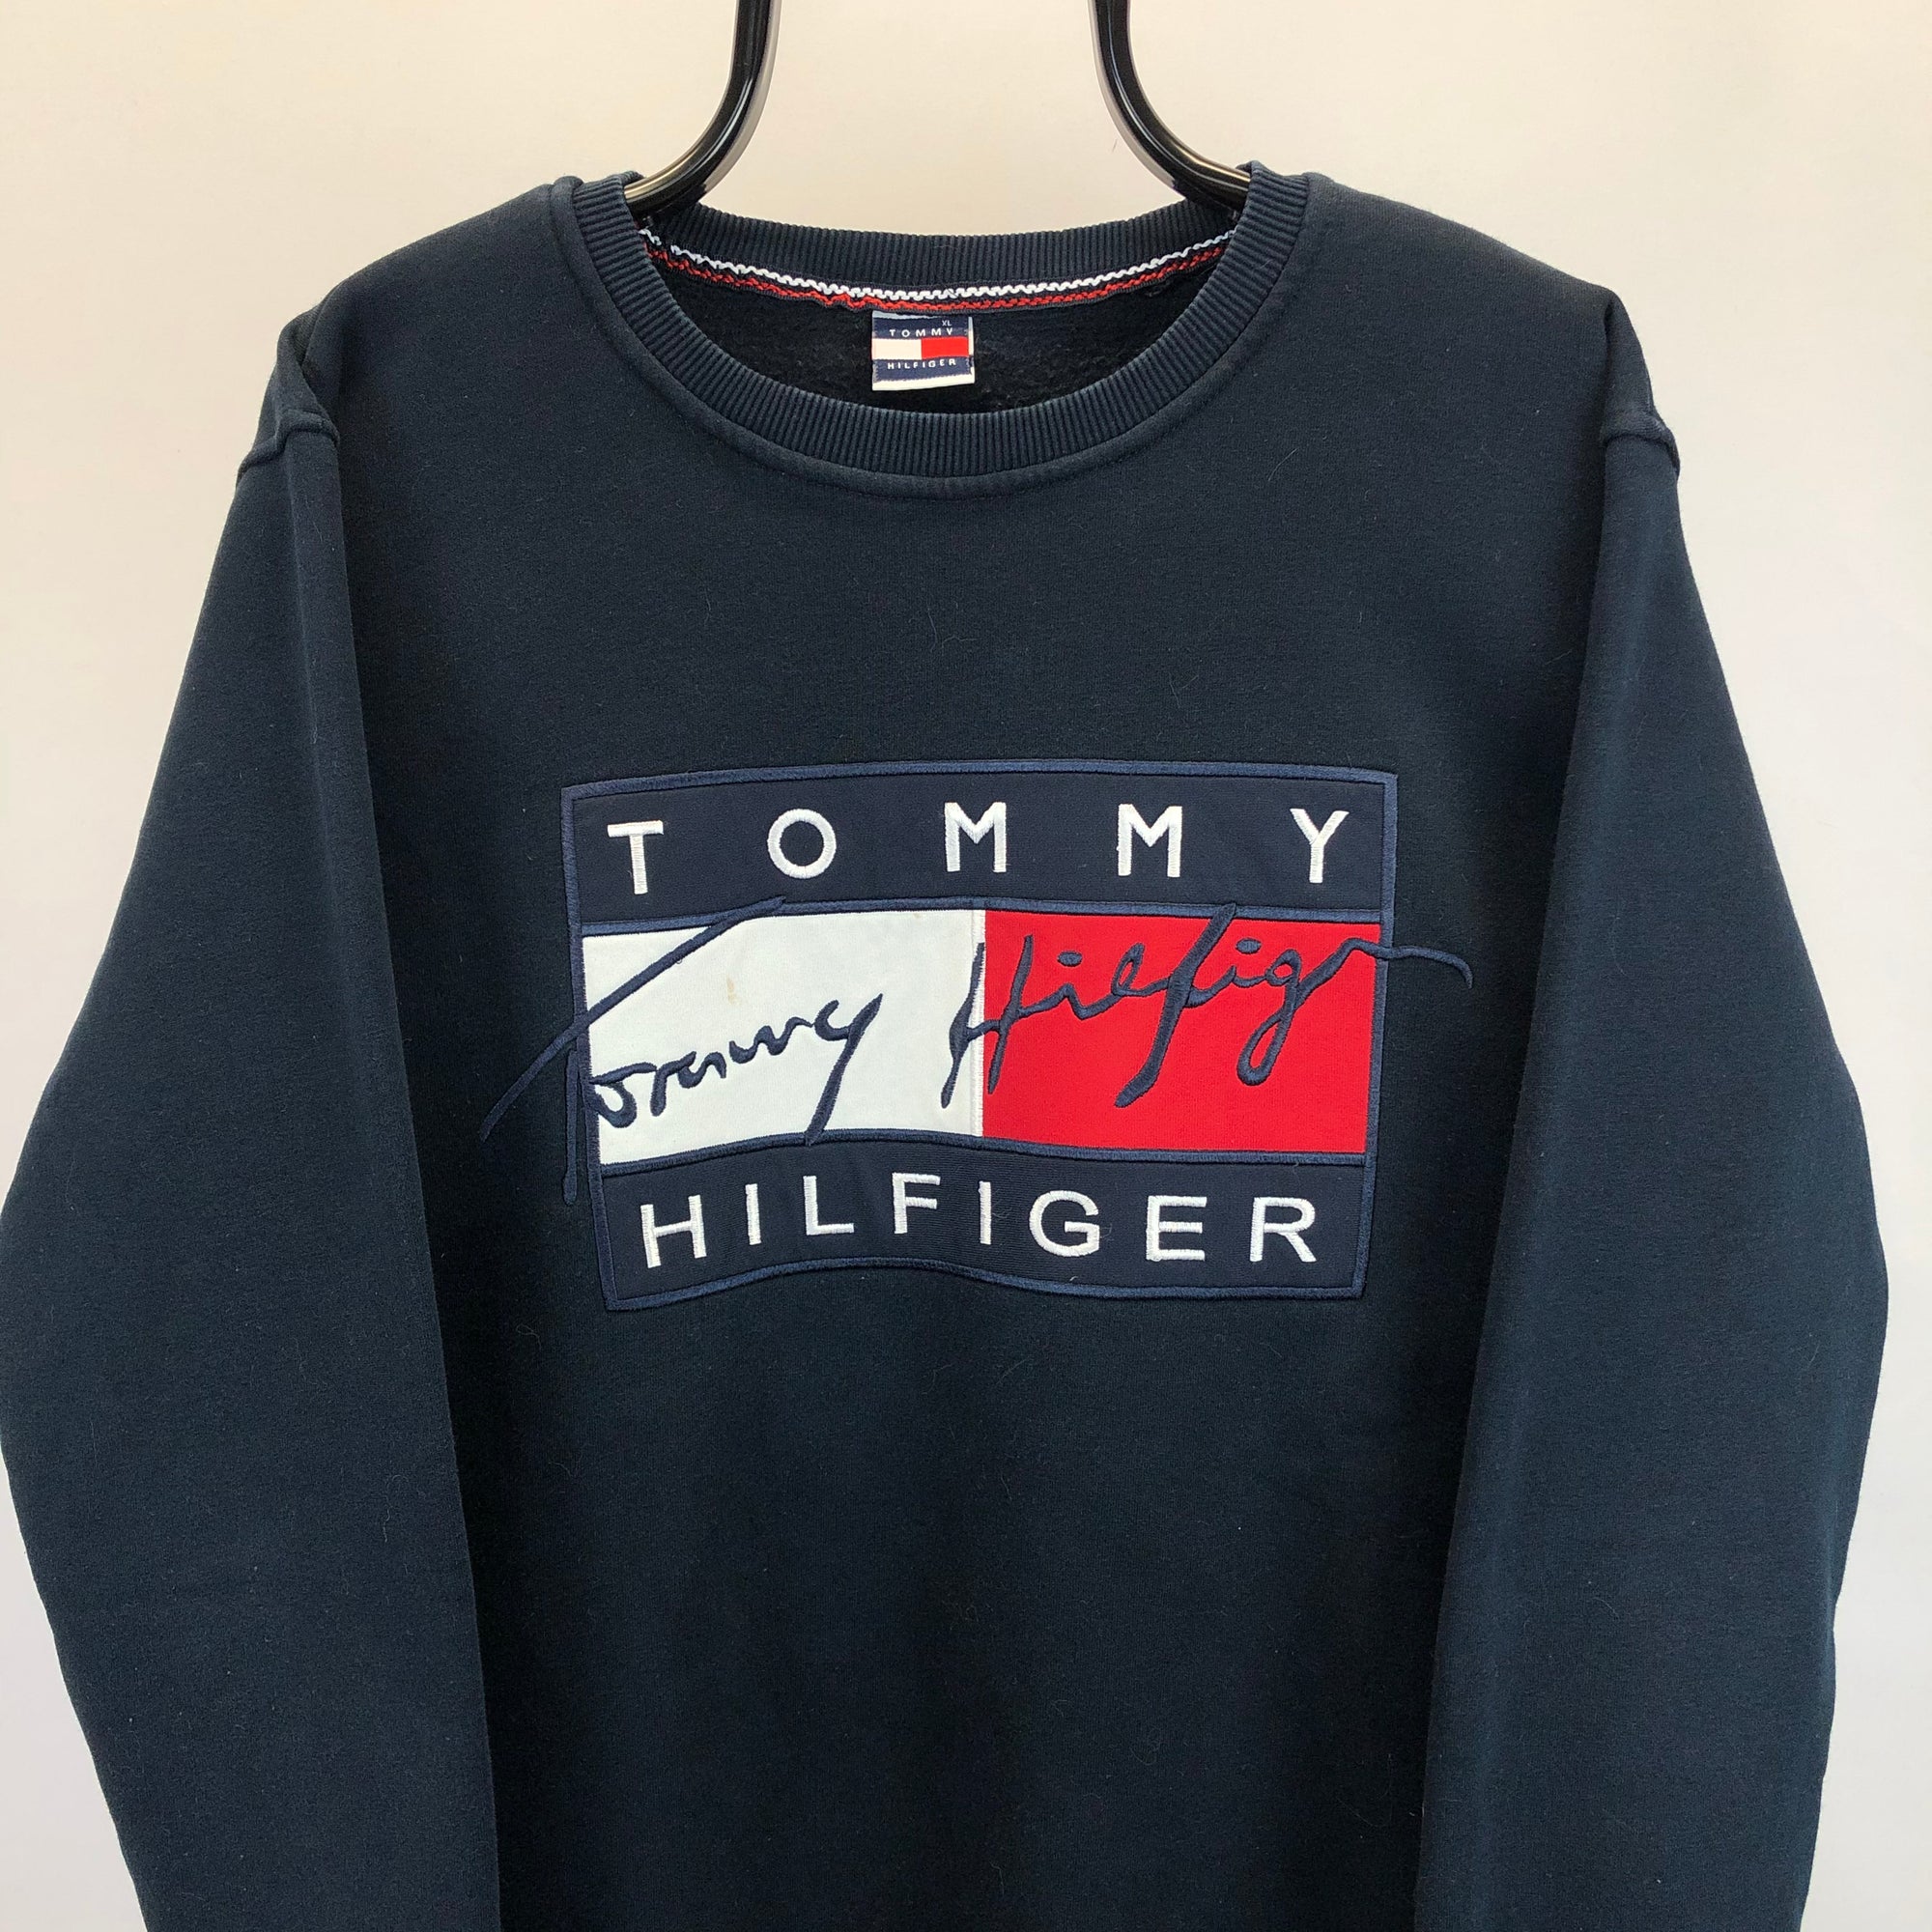 Vintage Tommy Hilfiger Spellout Sweatshirt in Navy - Men's Medium/Women's Large